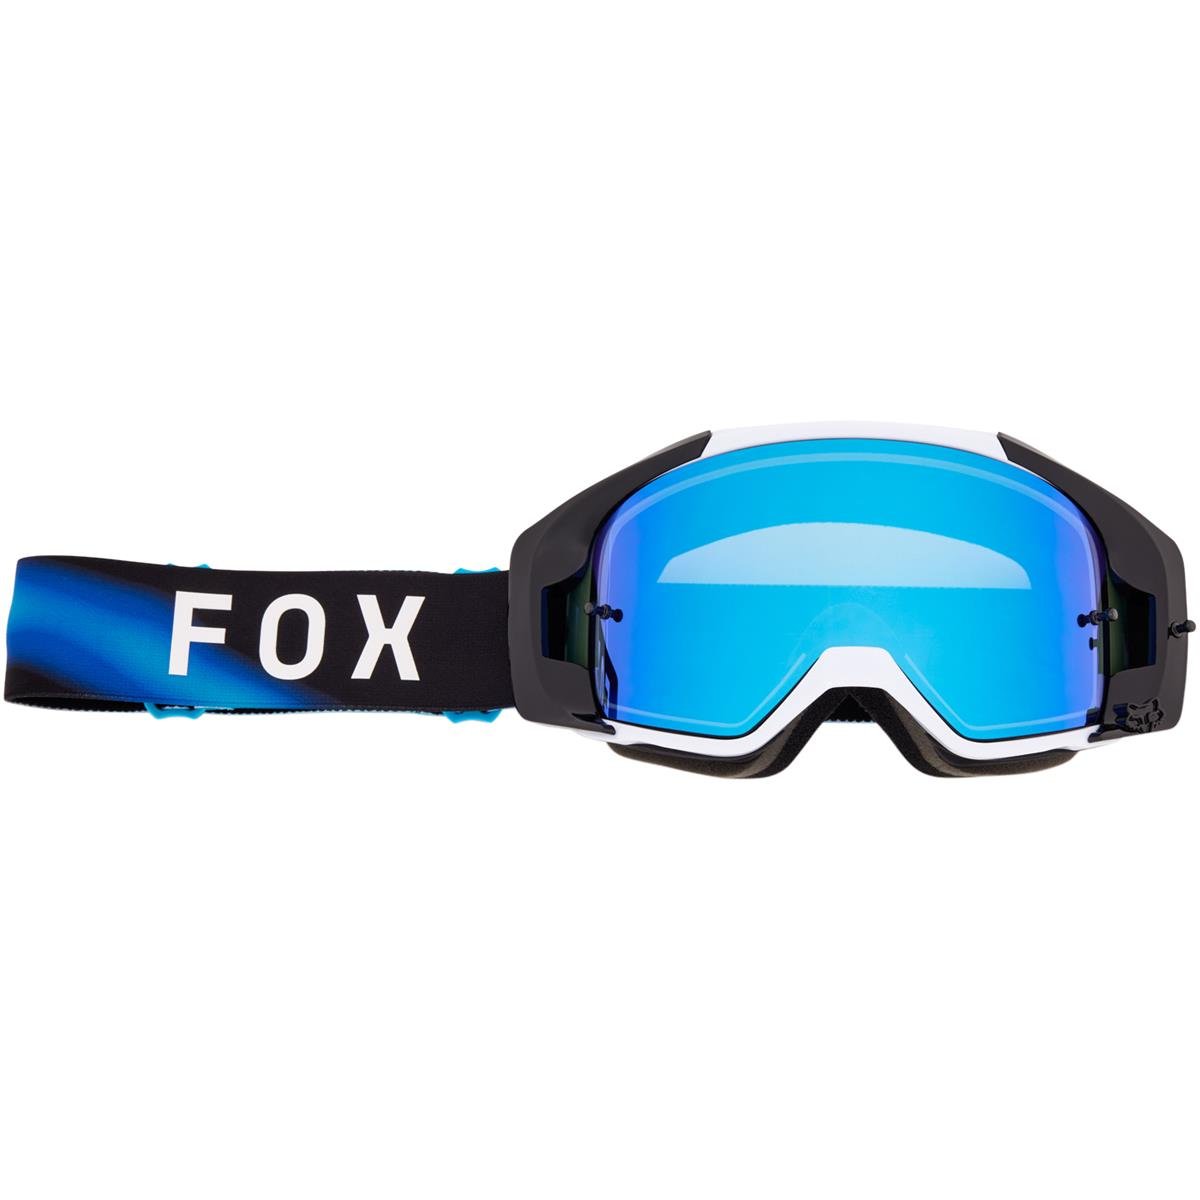 Fox Masque Vue Volatile - Spark - Black/Blue, Mirrored